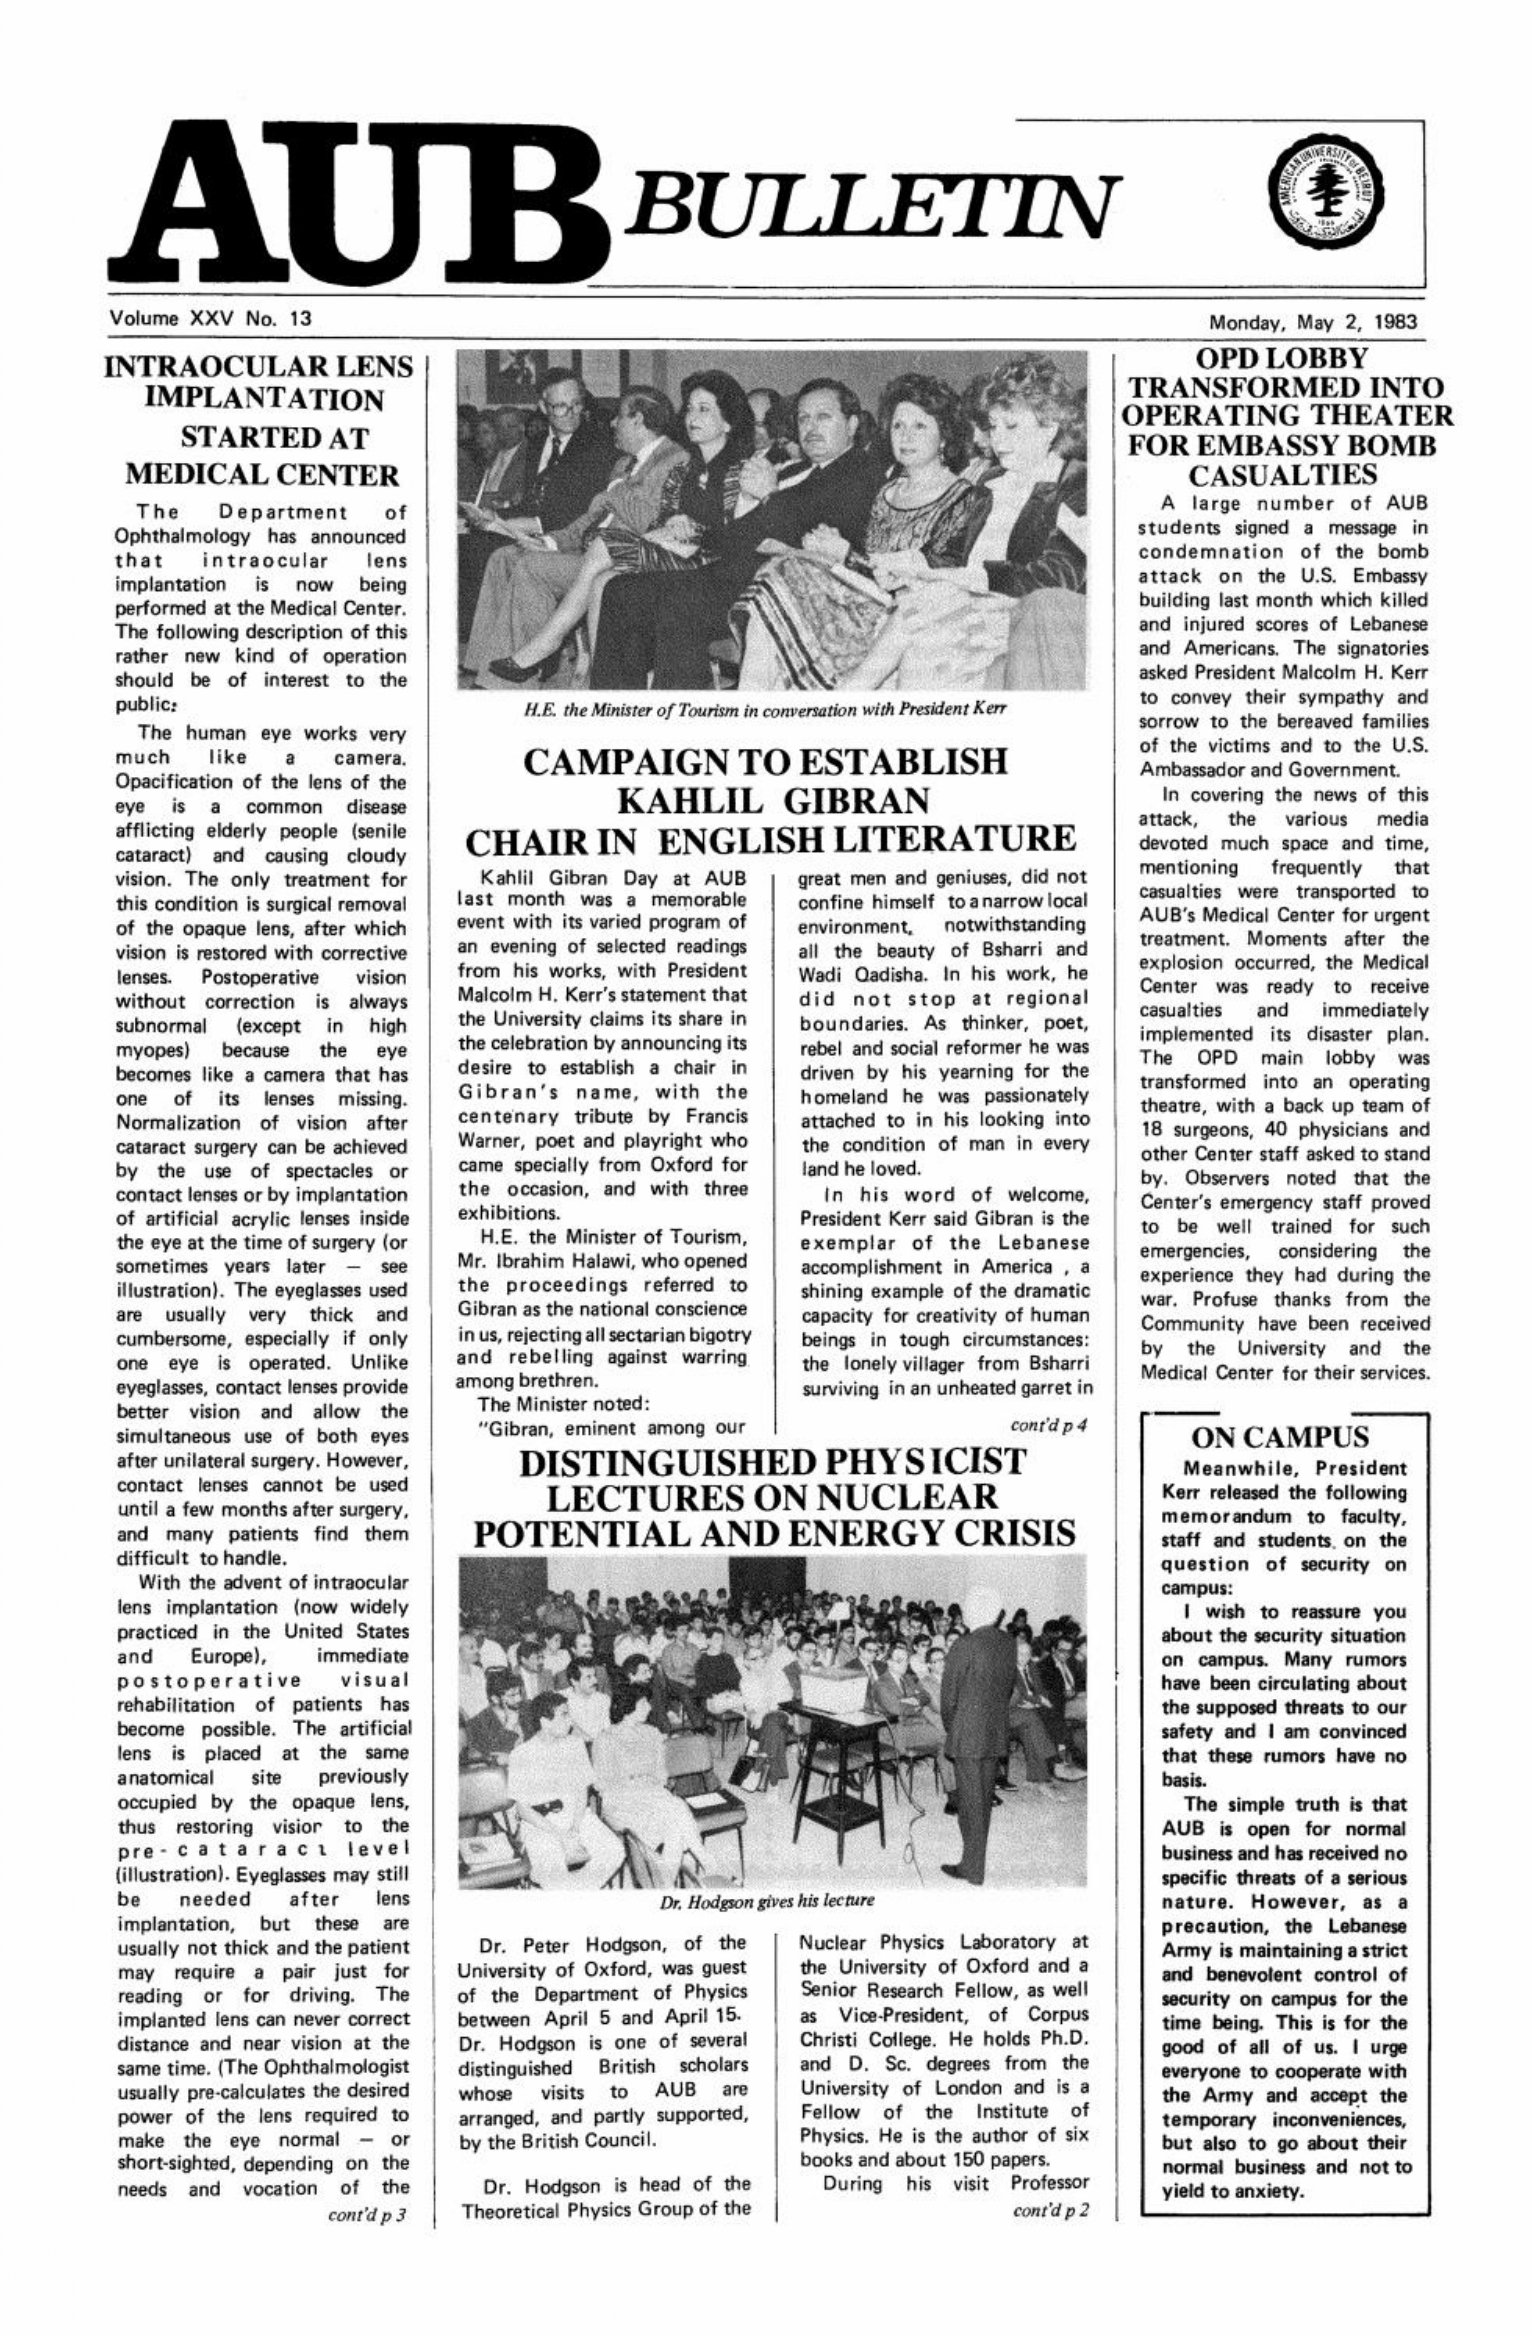 Campaign to Establish Kahlil Gibran Chair in Literature - Kahlil Gibran Day, American University of Beirut Bulletin, 25, 9, Mar 13, 1983, pp. 1,3.